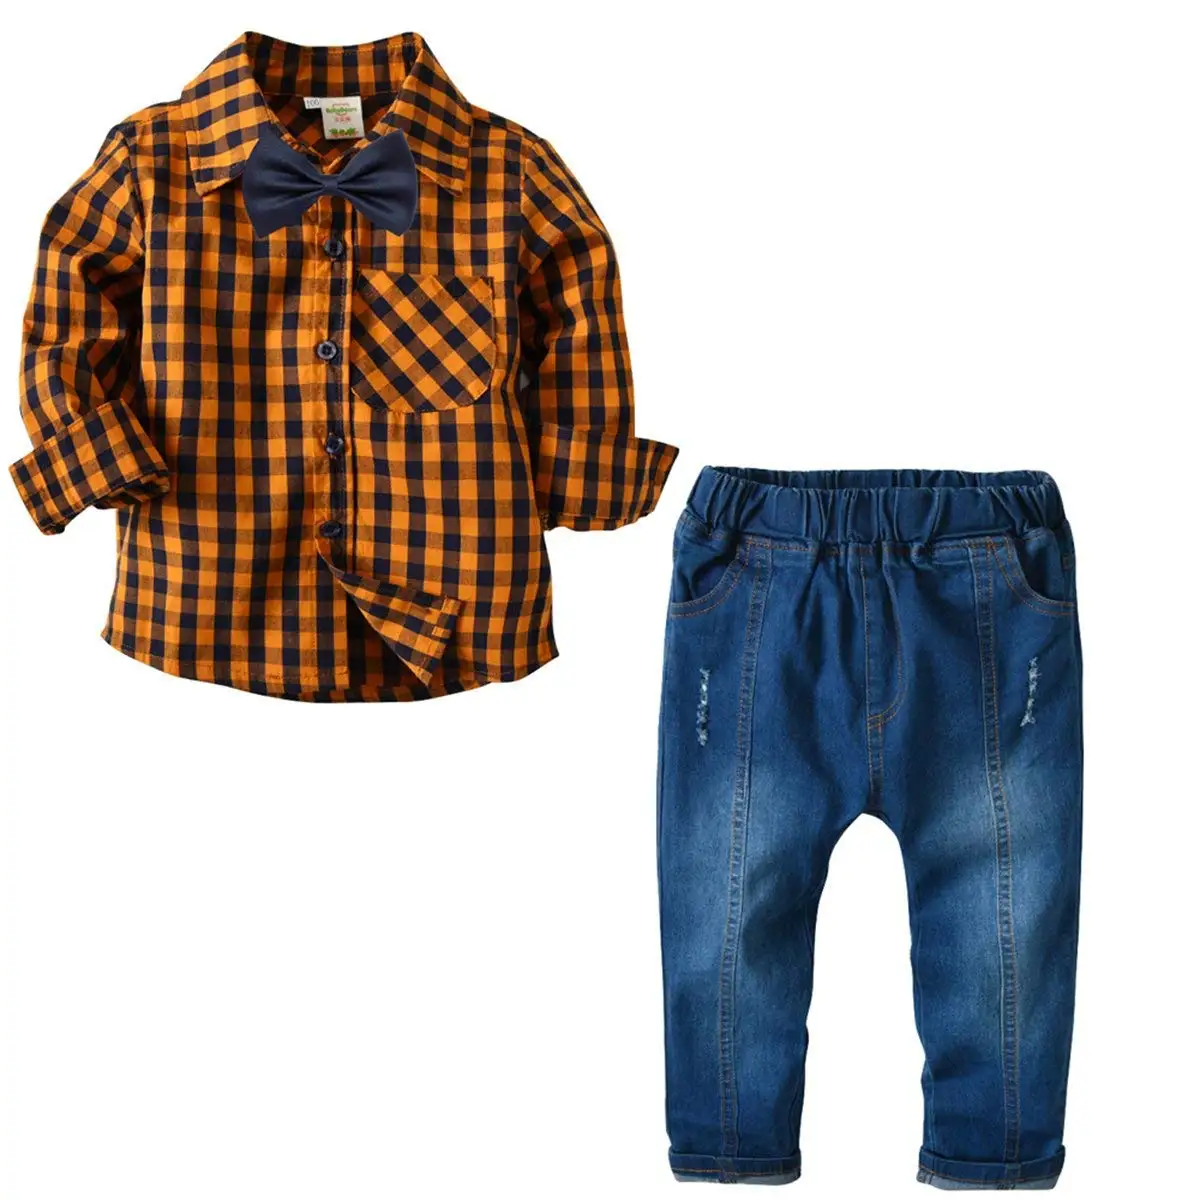 ALLAIBB Baby Toddler Boy Gentleman Outfit Dress Shirt+Suspender Plaid Pants 2Pcs Set